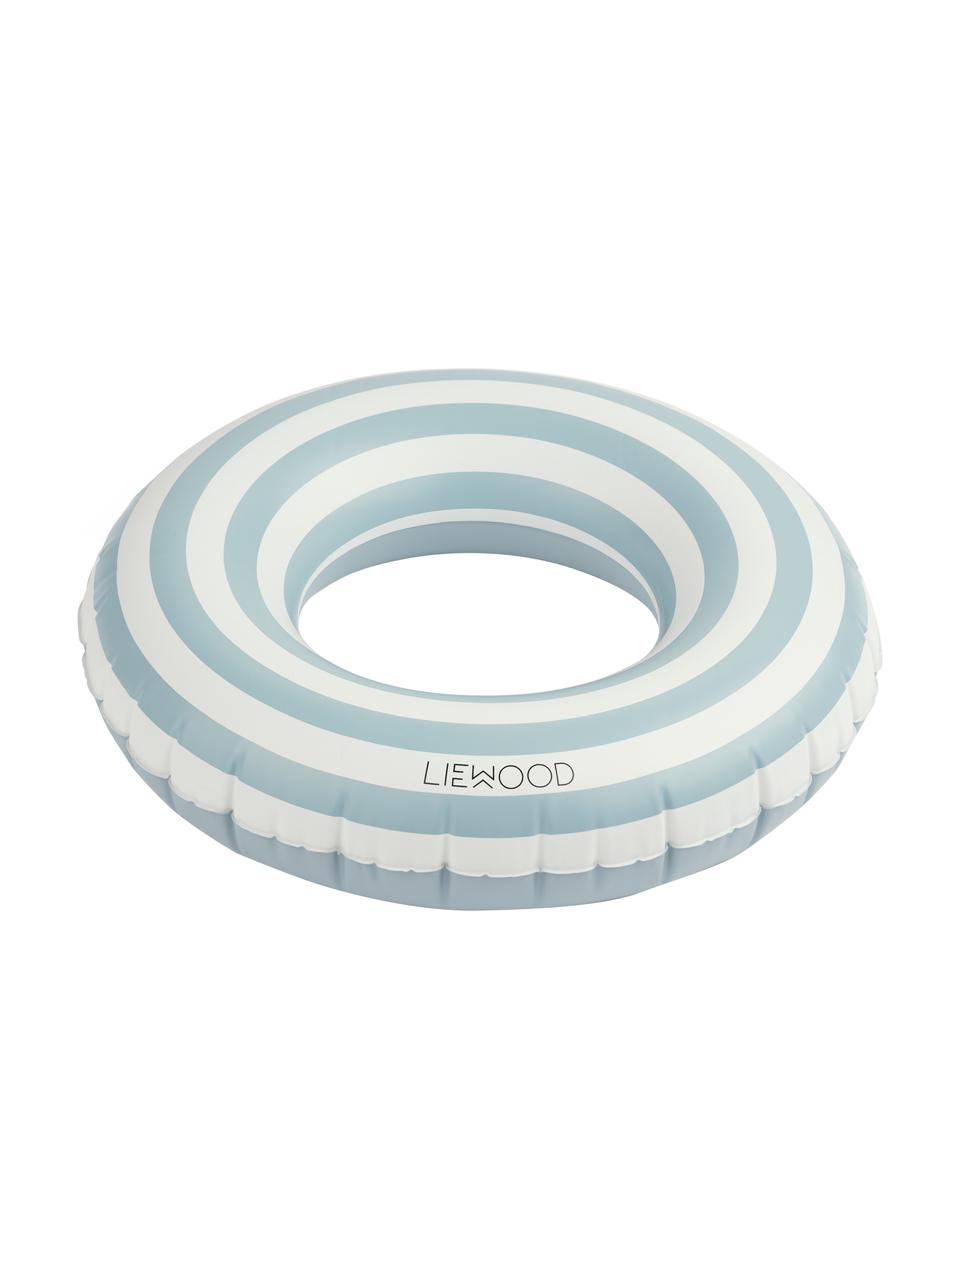 Schwimmring Baloo, 100% Kunststoff (PVC), Blau, Weiss, Ø 45 cm